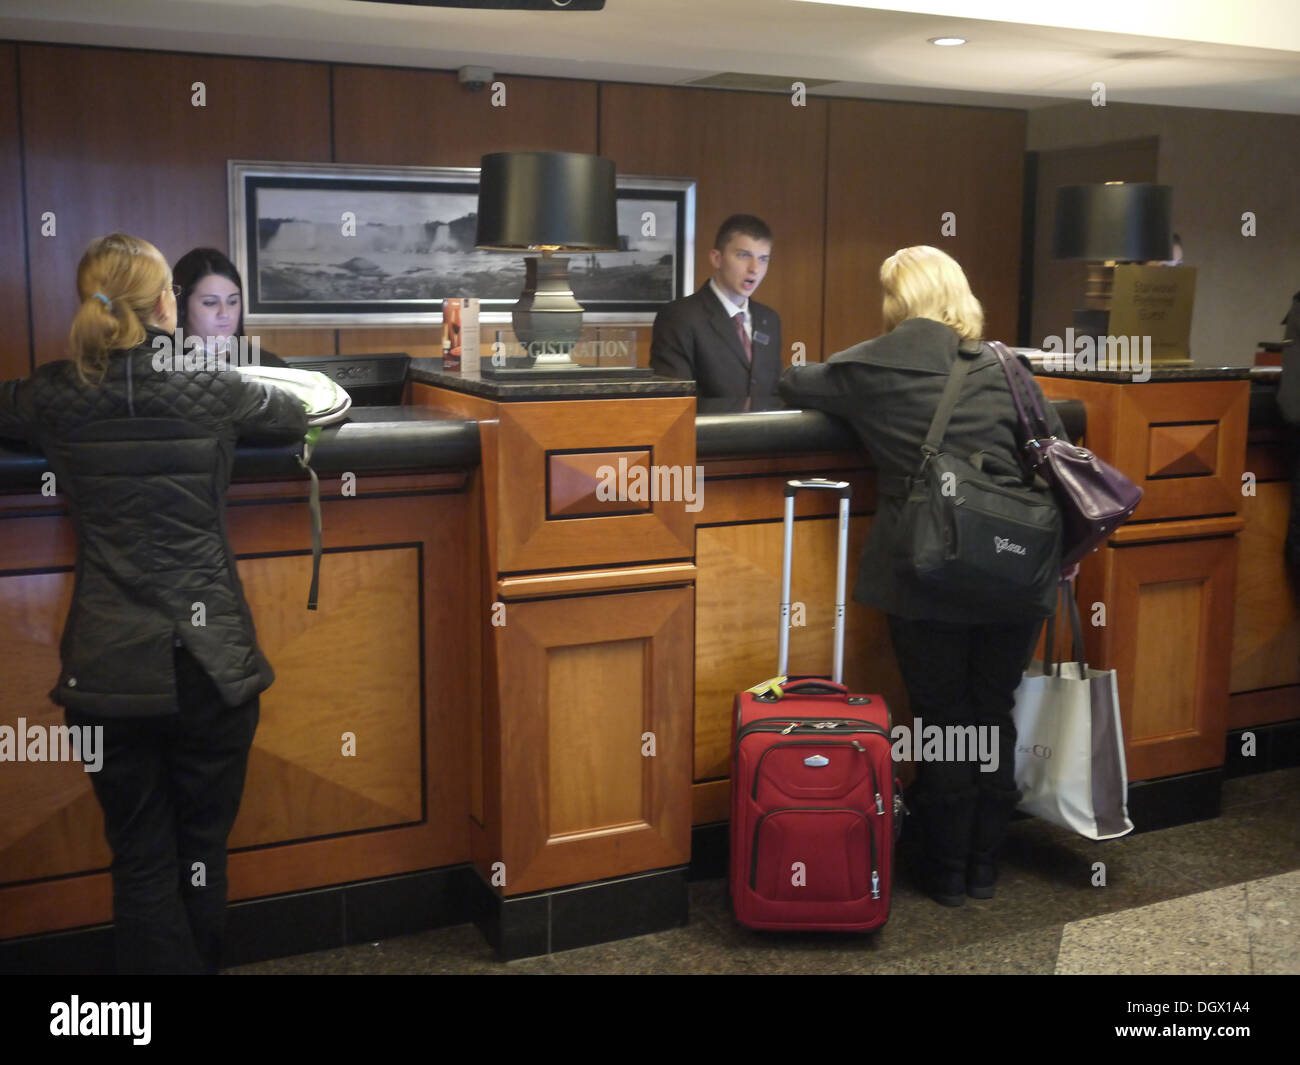 Sheraton Hotel check-in Schalter lobby Stockfoto